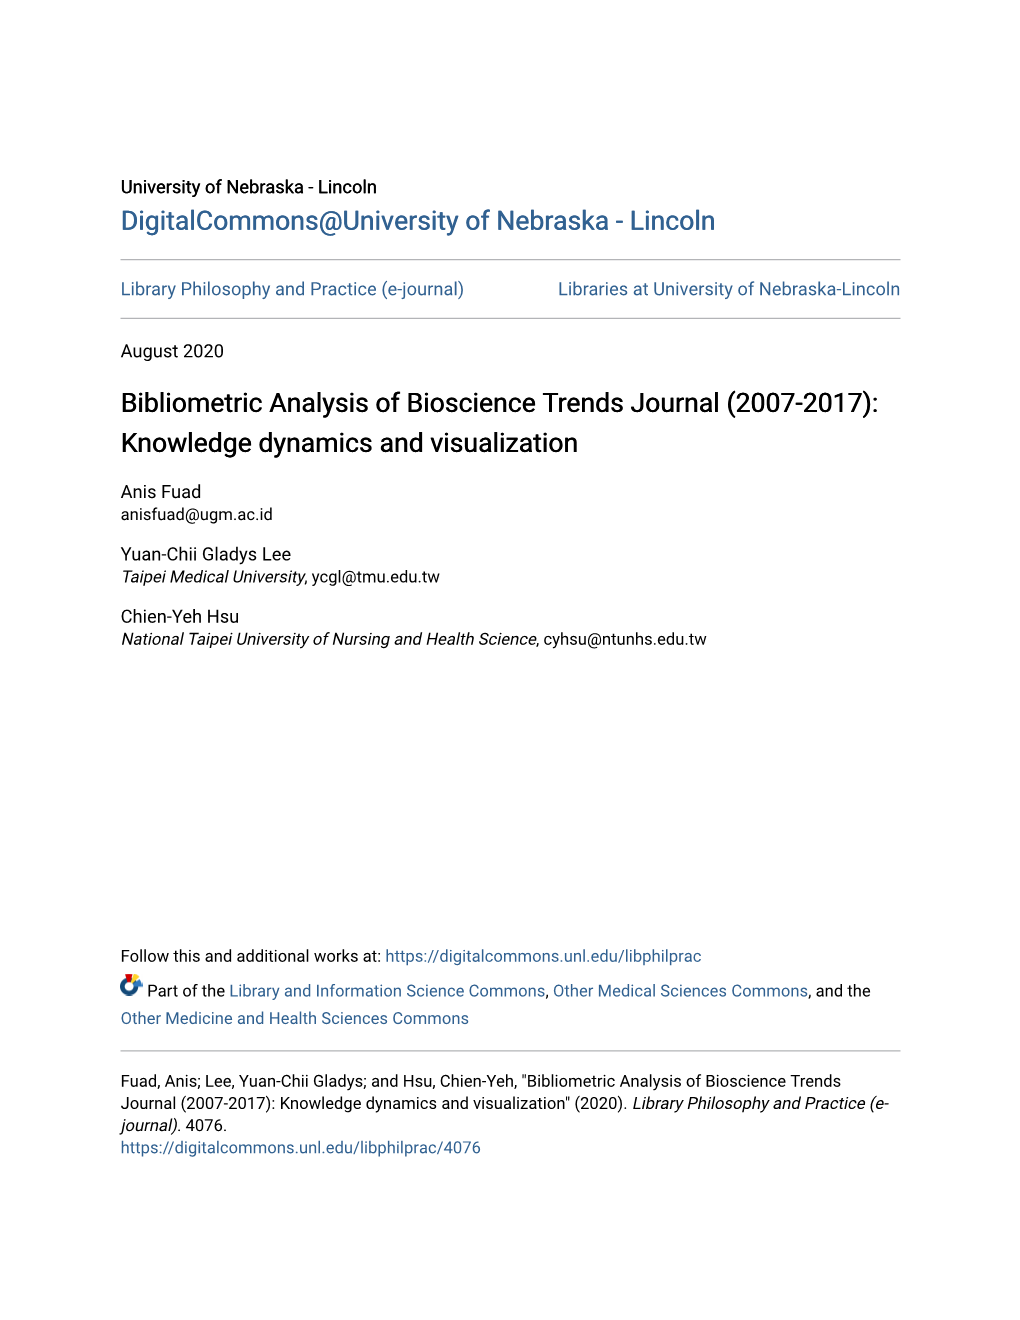 Bibliometric Analysis of Bioscience Trends Journal (2007-2017): Knowledge Dynamics and Visualization